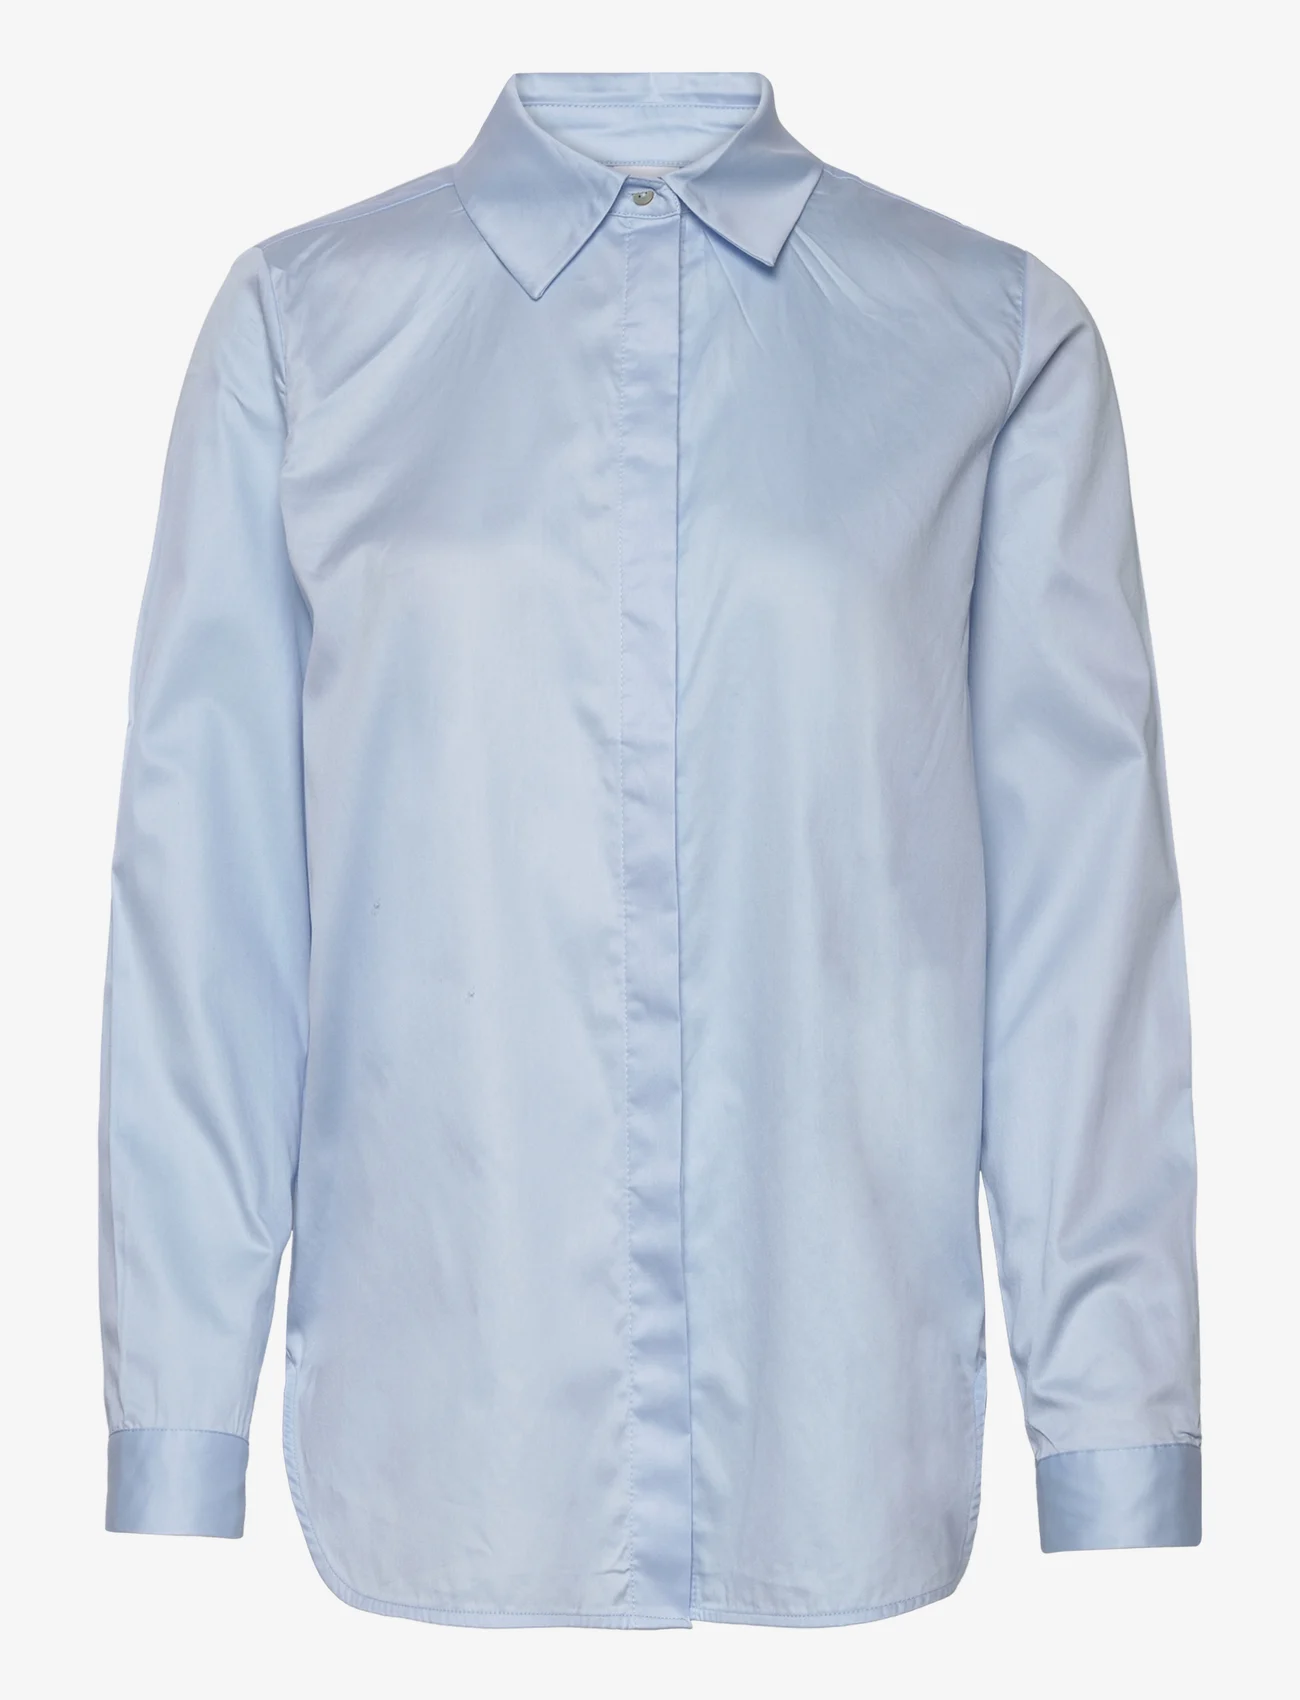 Nümph - NUHELENA NOOS SHIRT - koszule z długimi rękawami - airy blue - 0